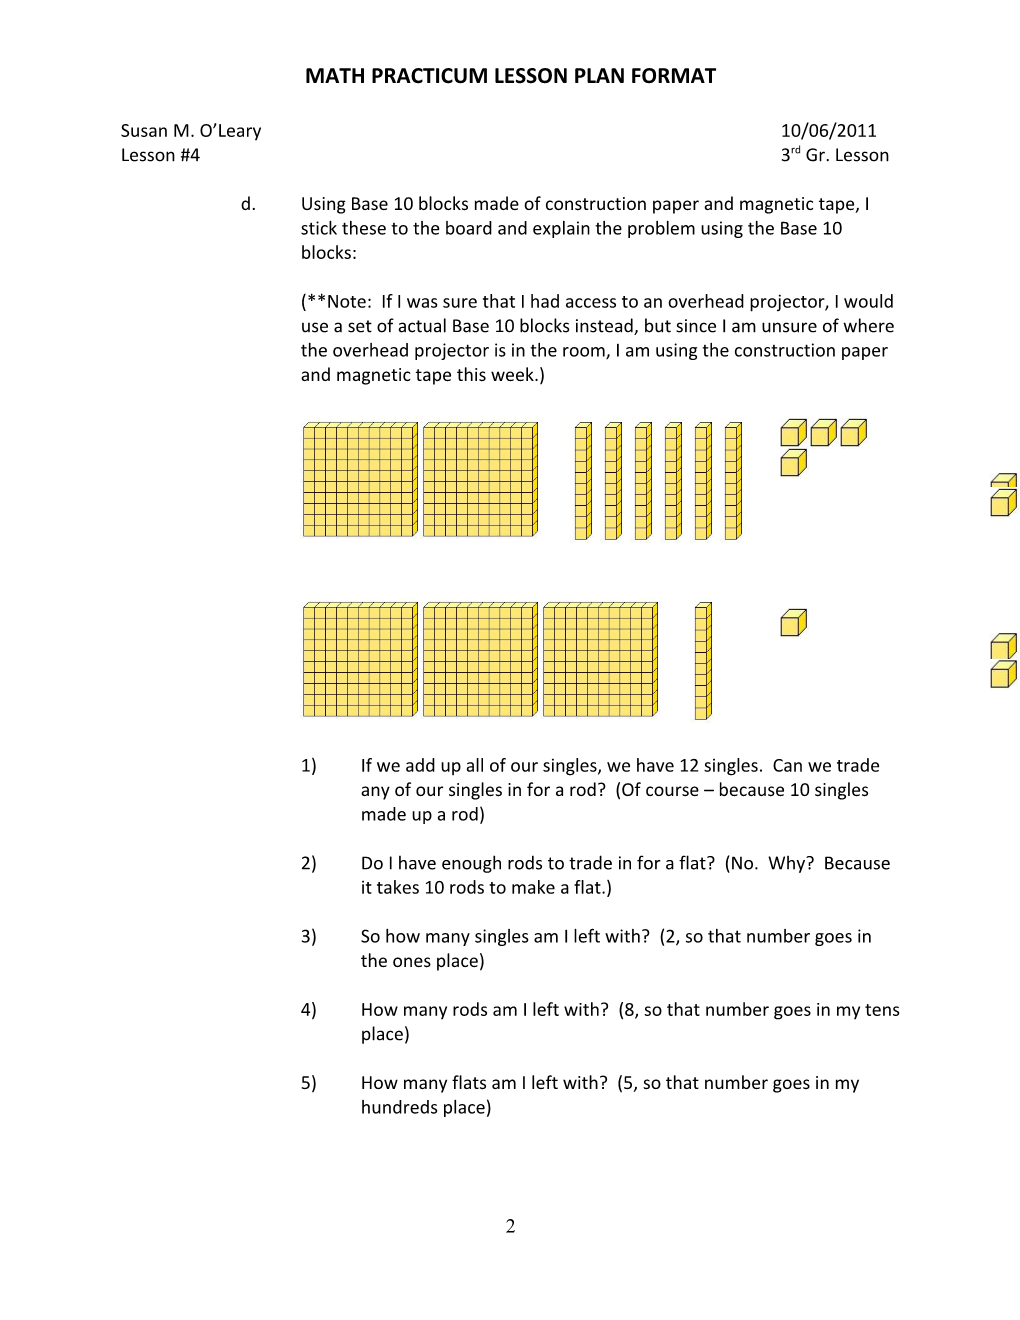 Math Practicum Lesson Plan Format